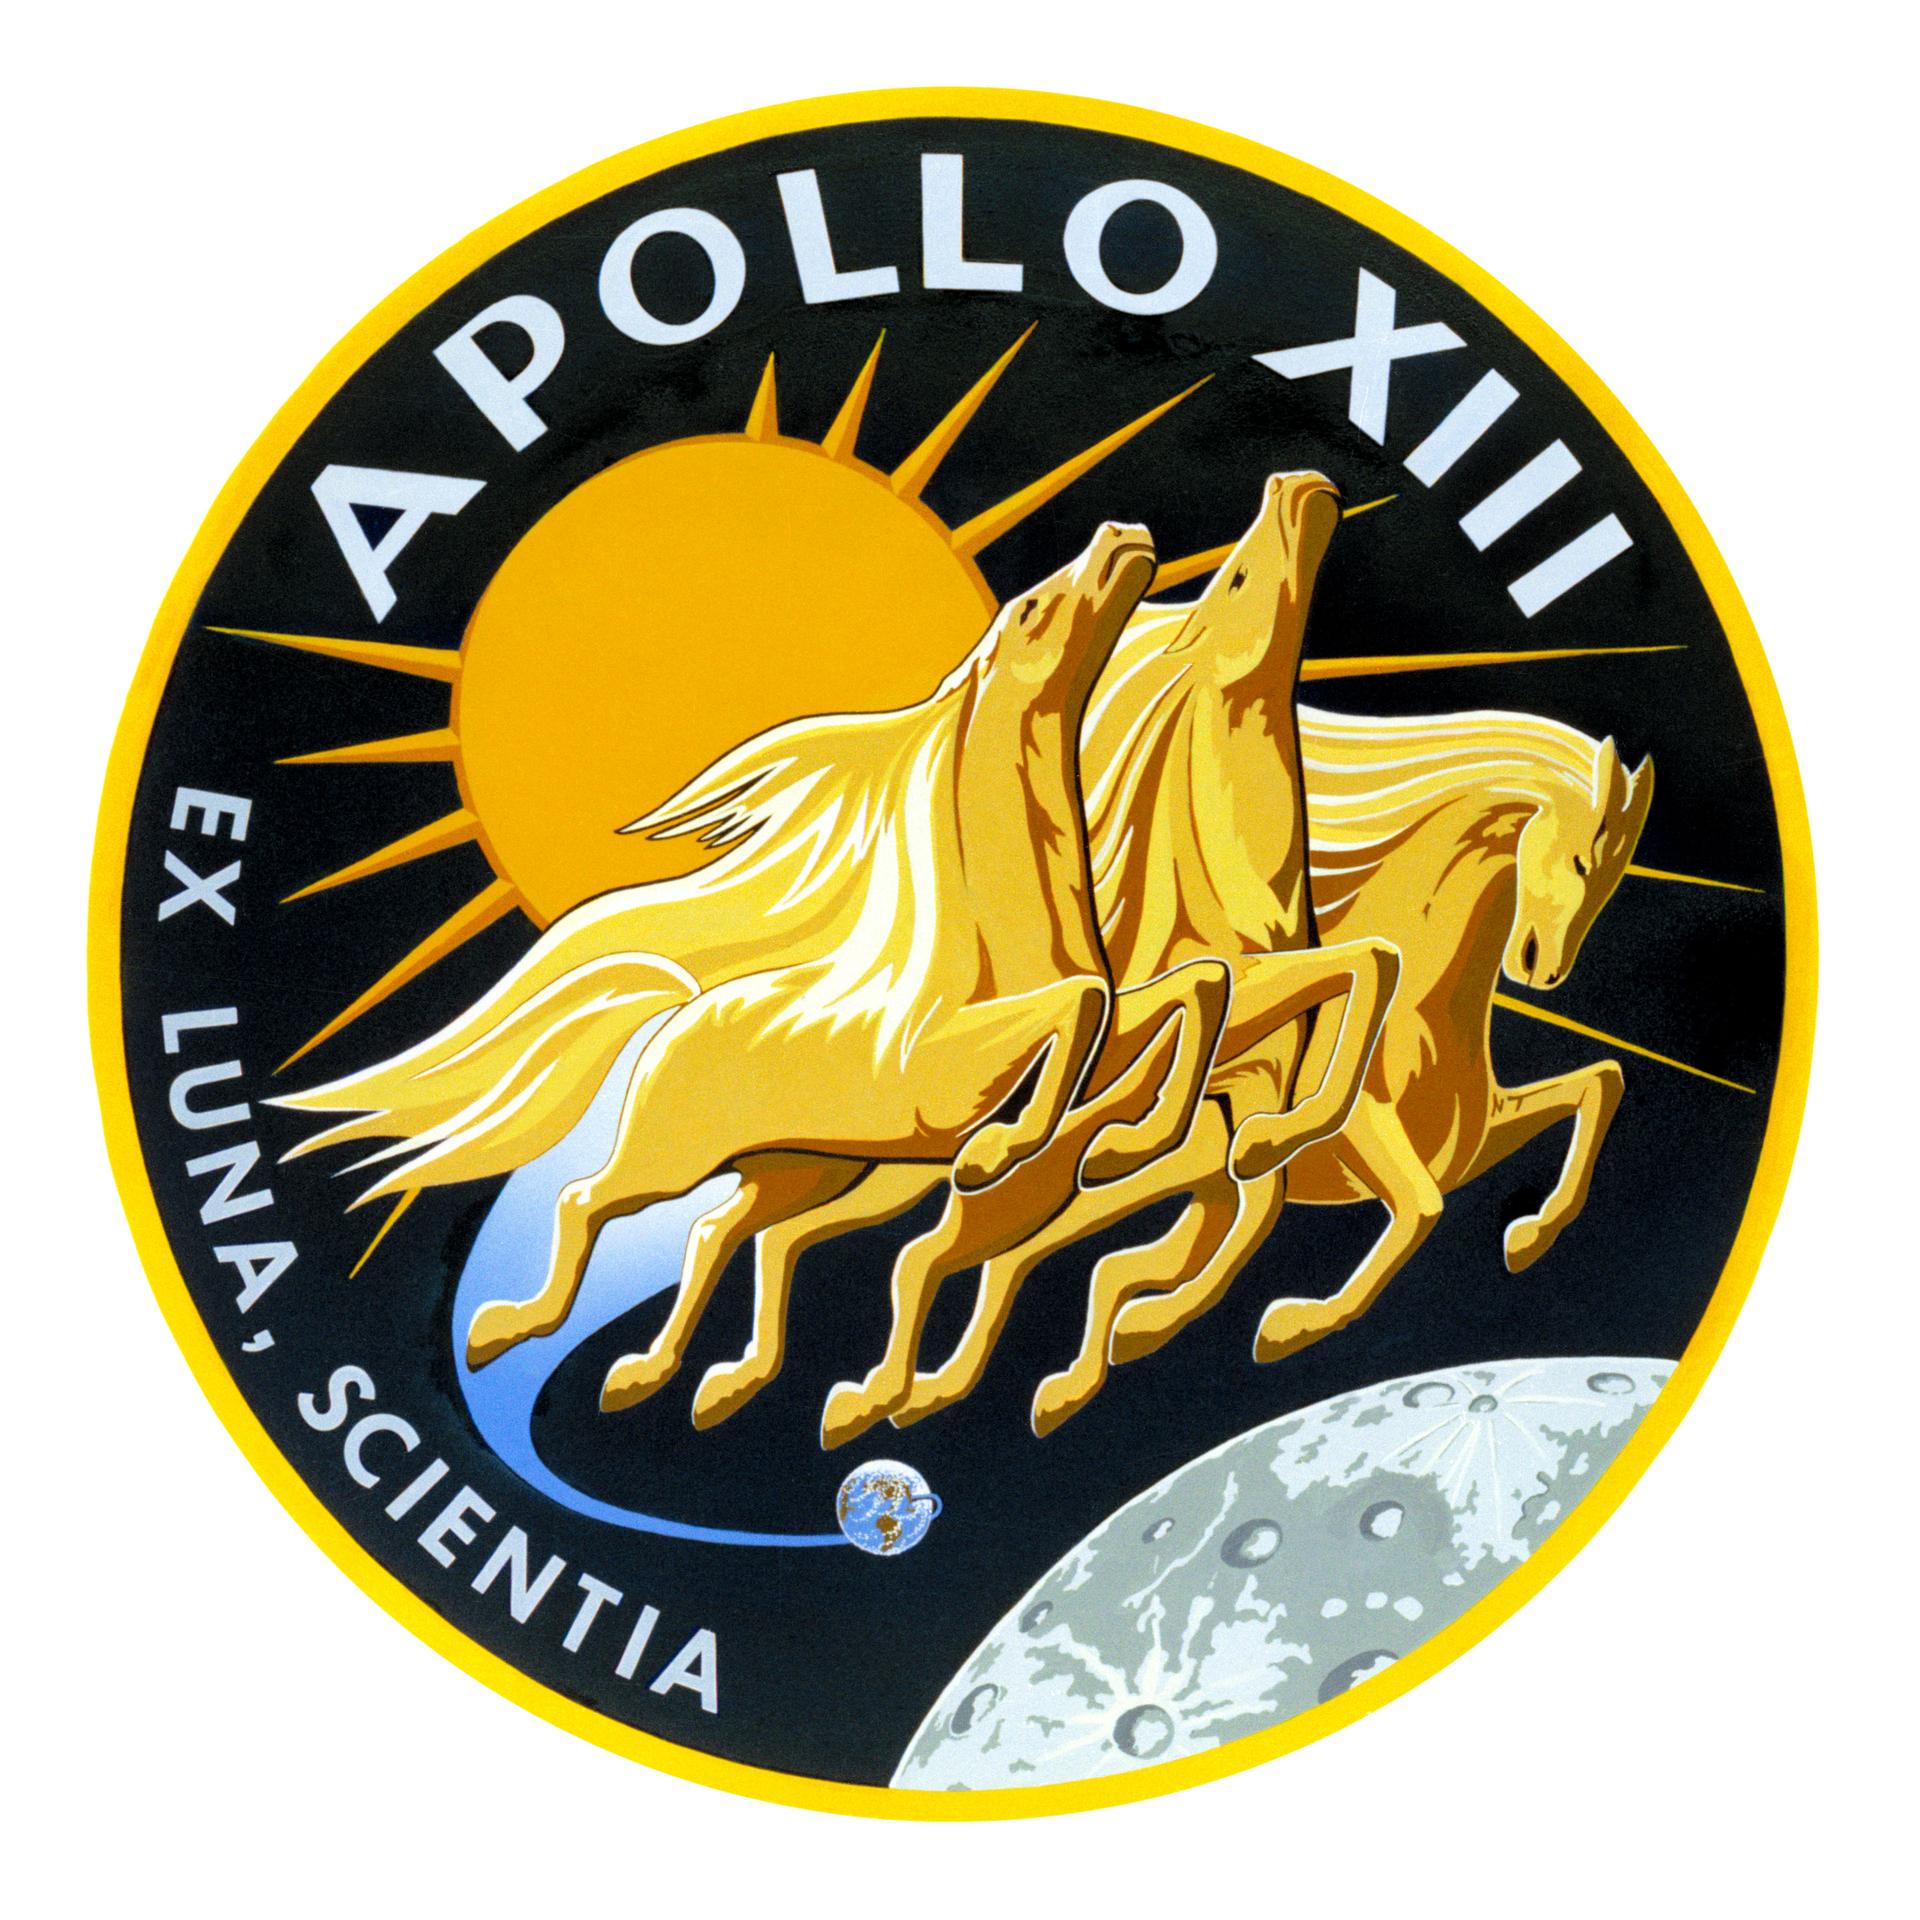 The Apollo 13 mission patch.